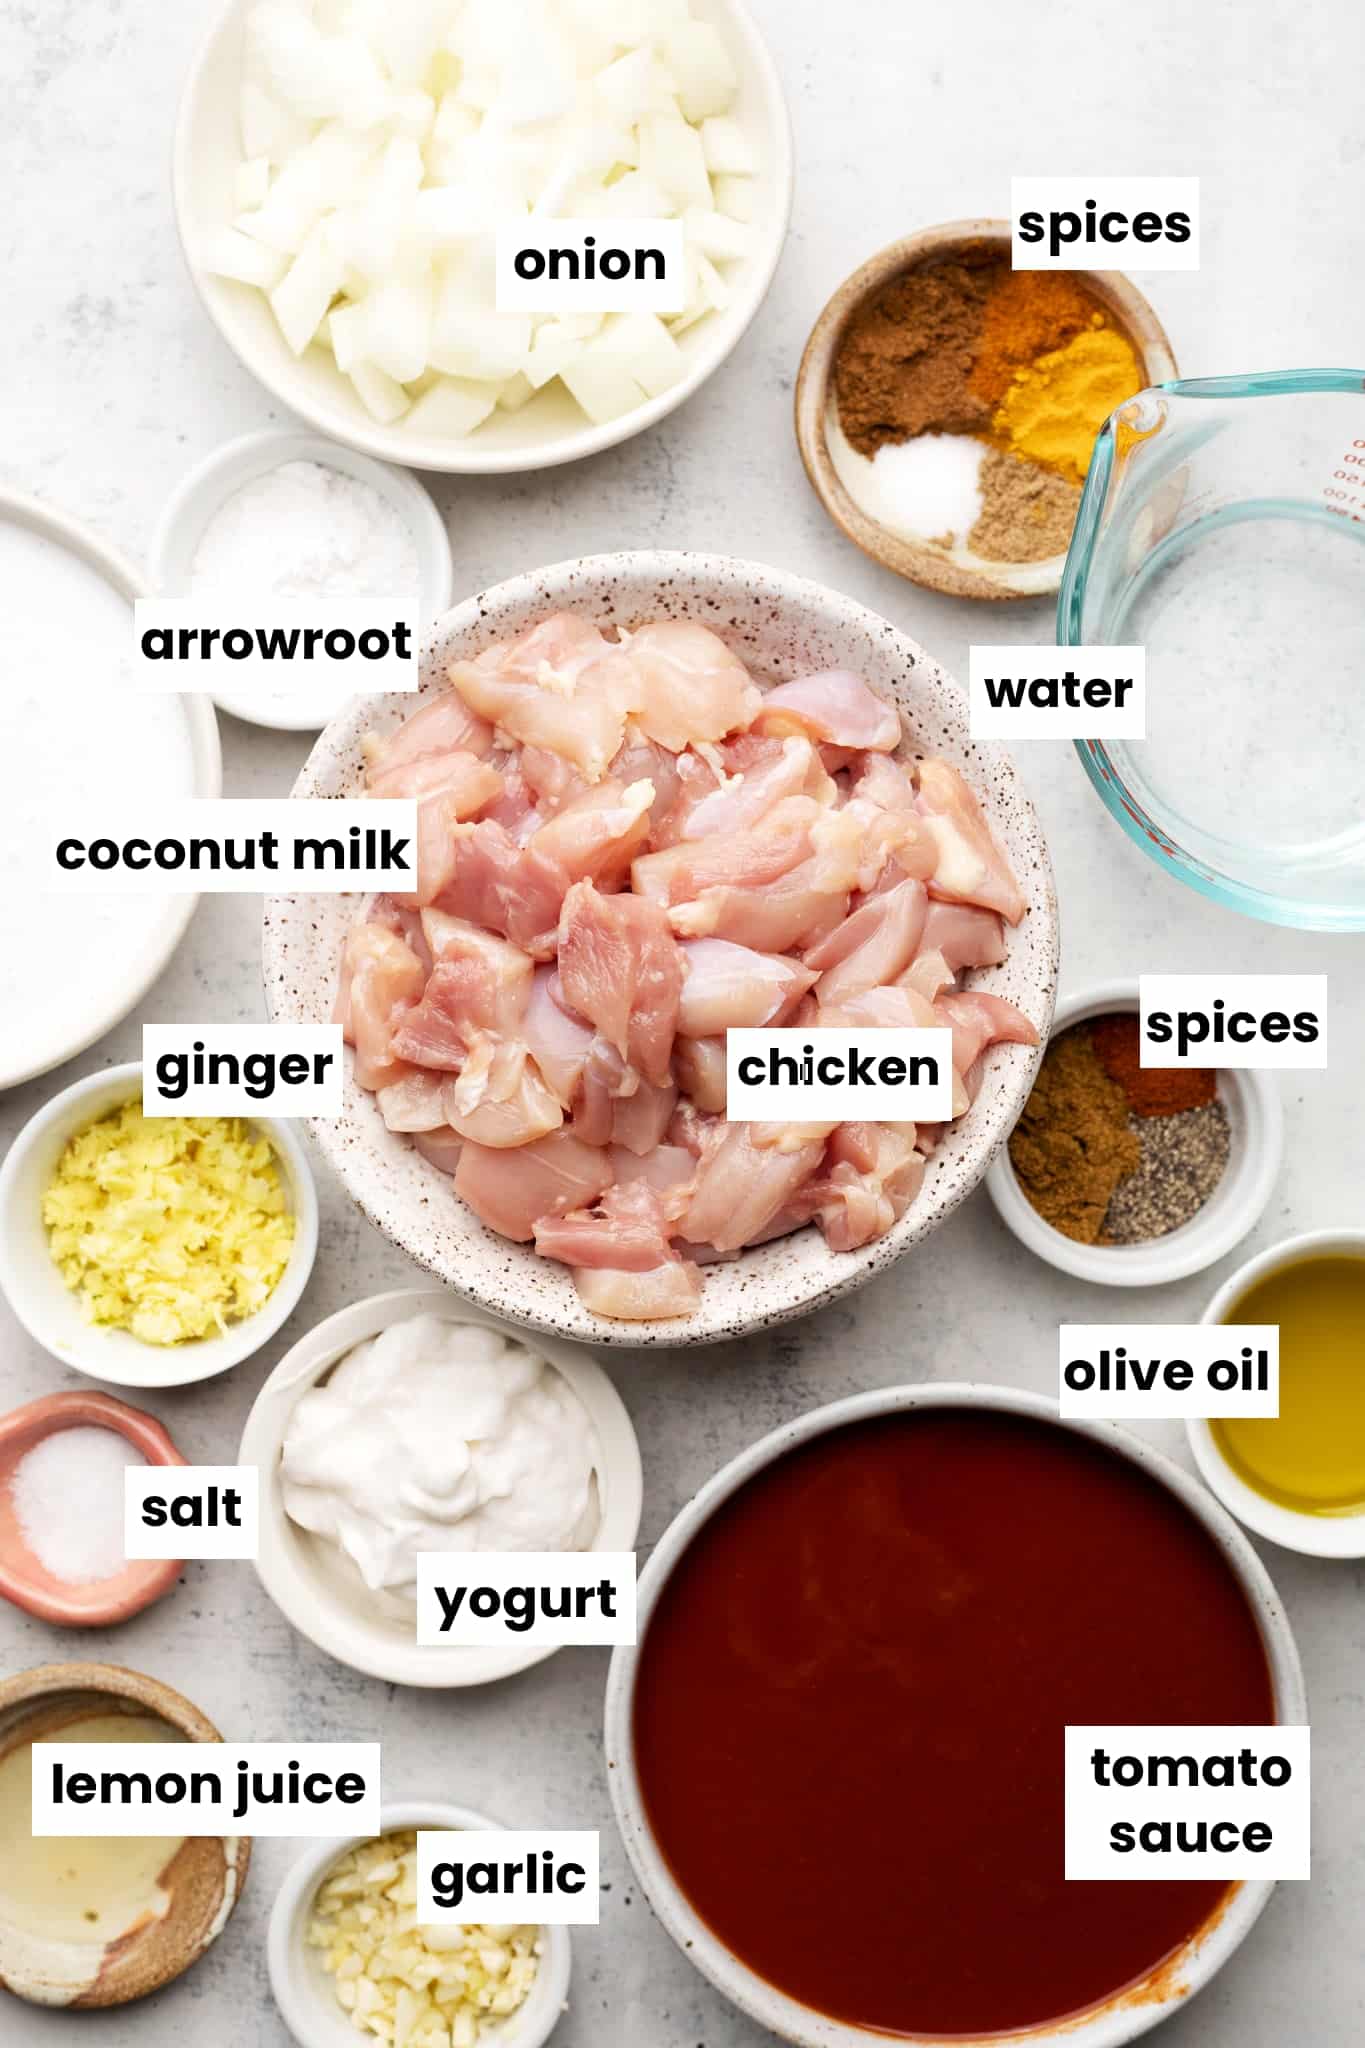 Healthy ingredients for chicken tikka masala, including chicken, garam masala, lemon juice, garlic, tomato sauce, olive oil, yogurt, water, ginger, coconut milk, onion, arrowroot, and spices.